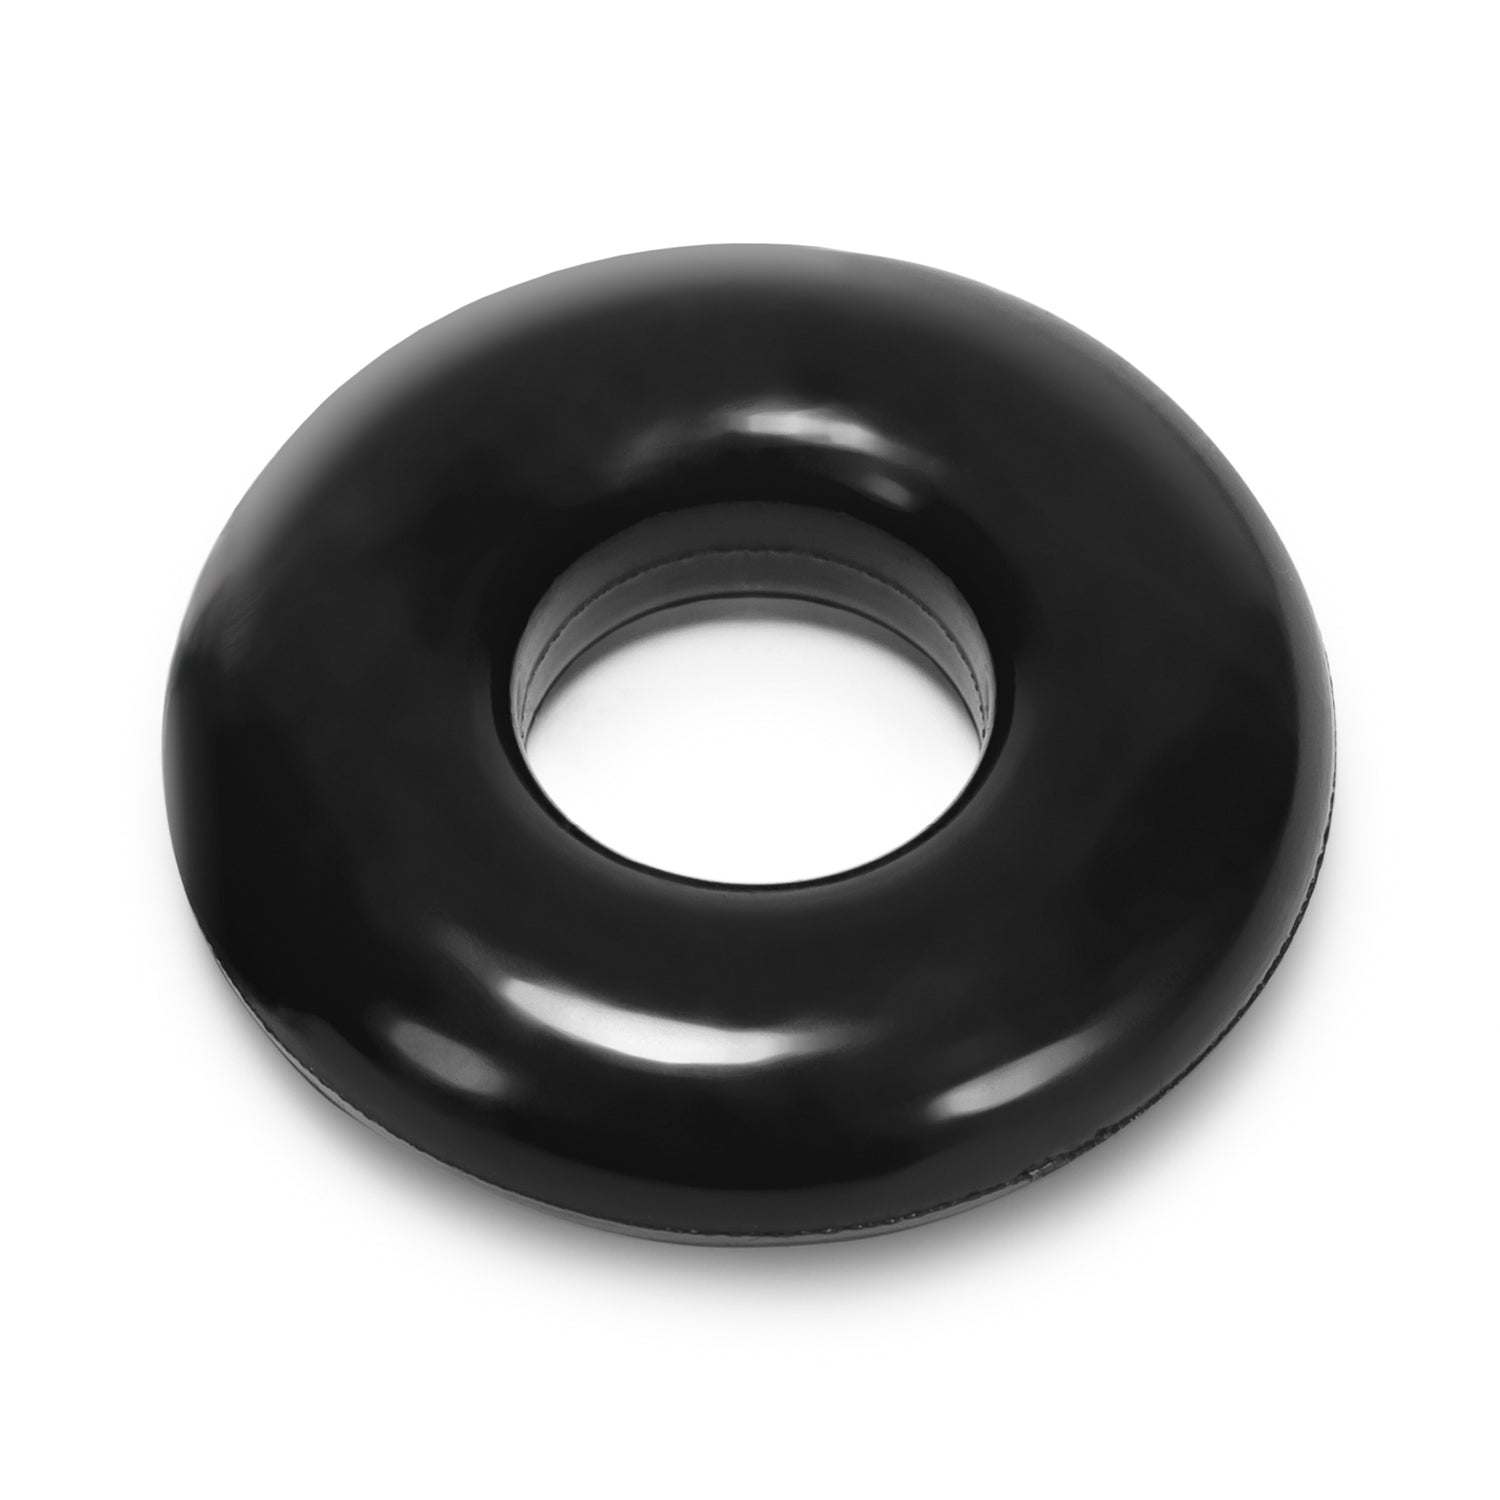 Donut 2 Cockring Large Black - Just for you desires